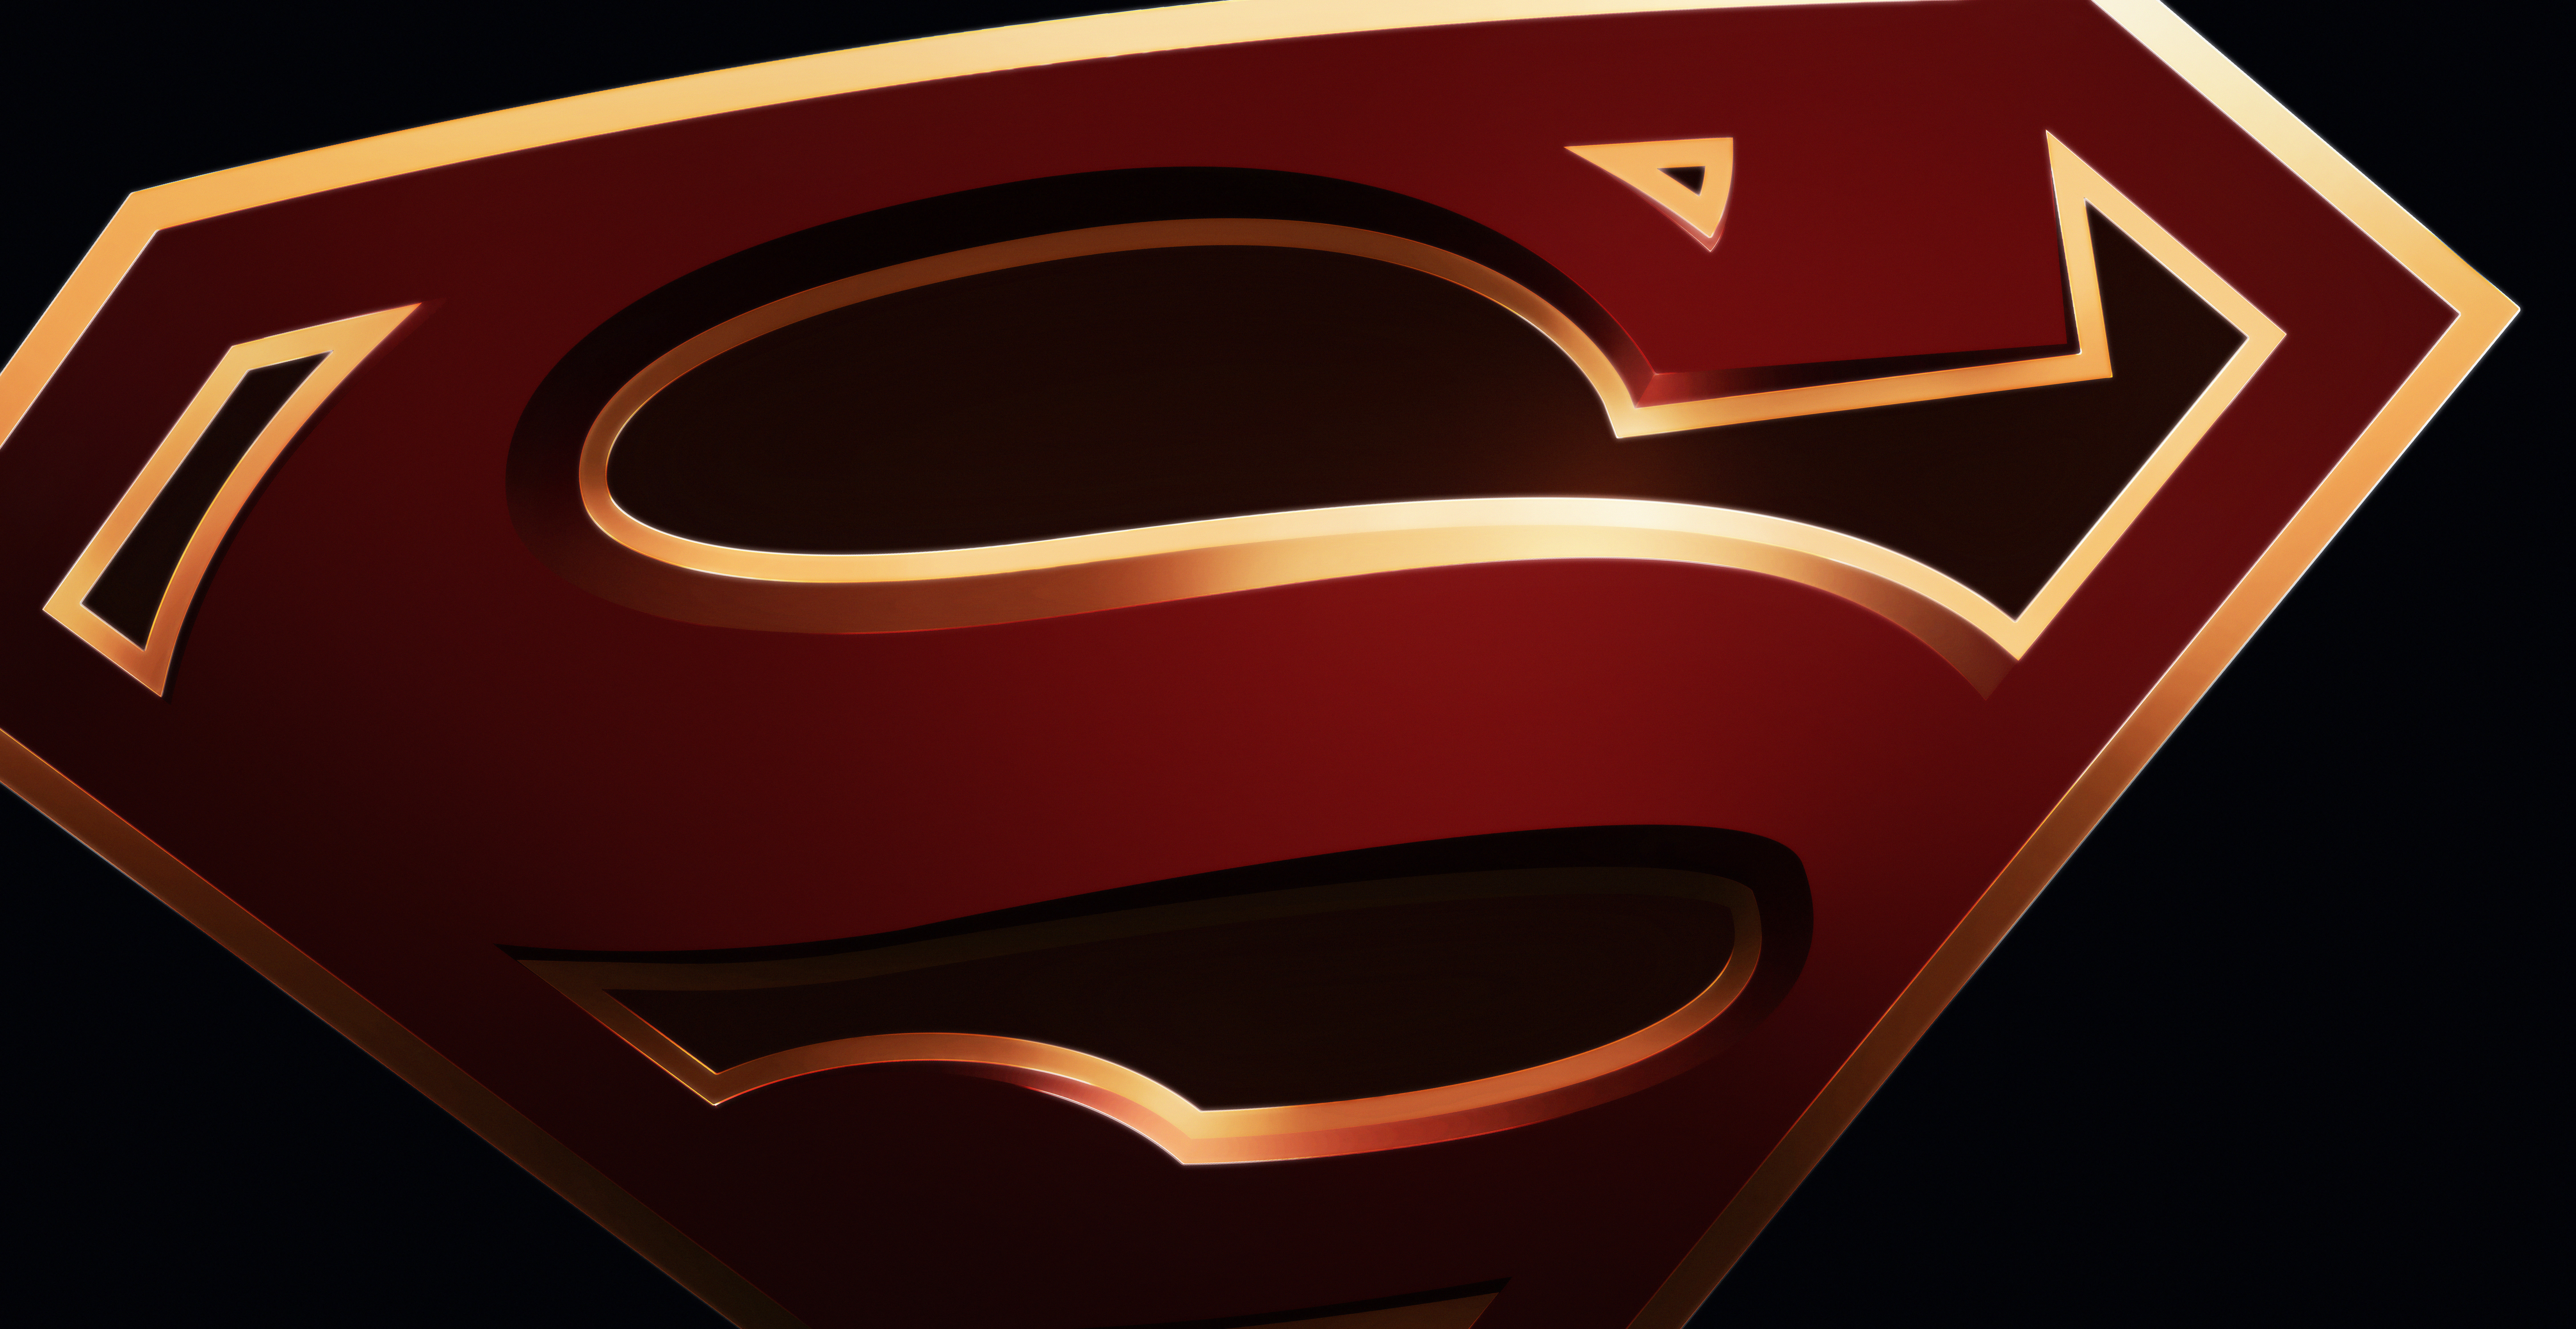 General 9033x4662 Superman superman logo photoshopped superhero digital art logo simple background